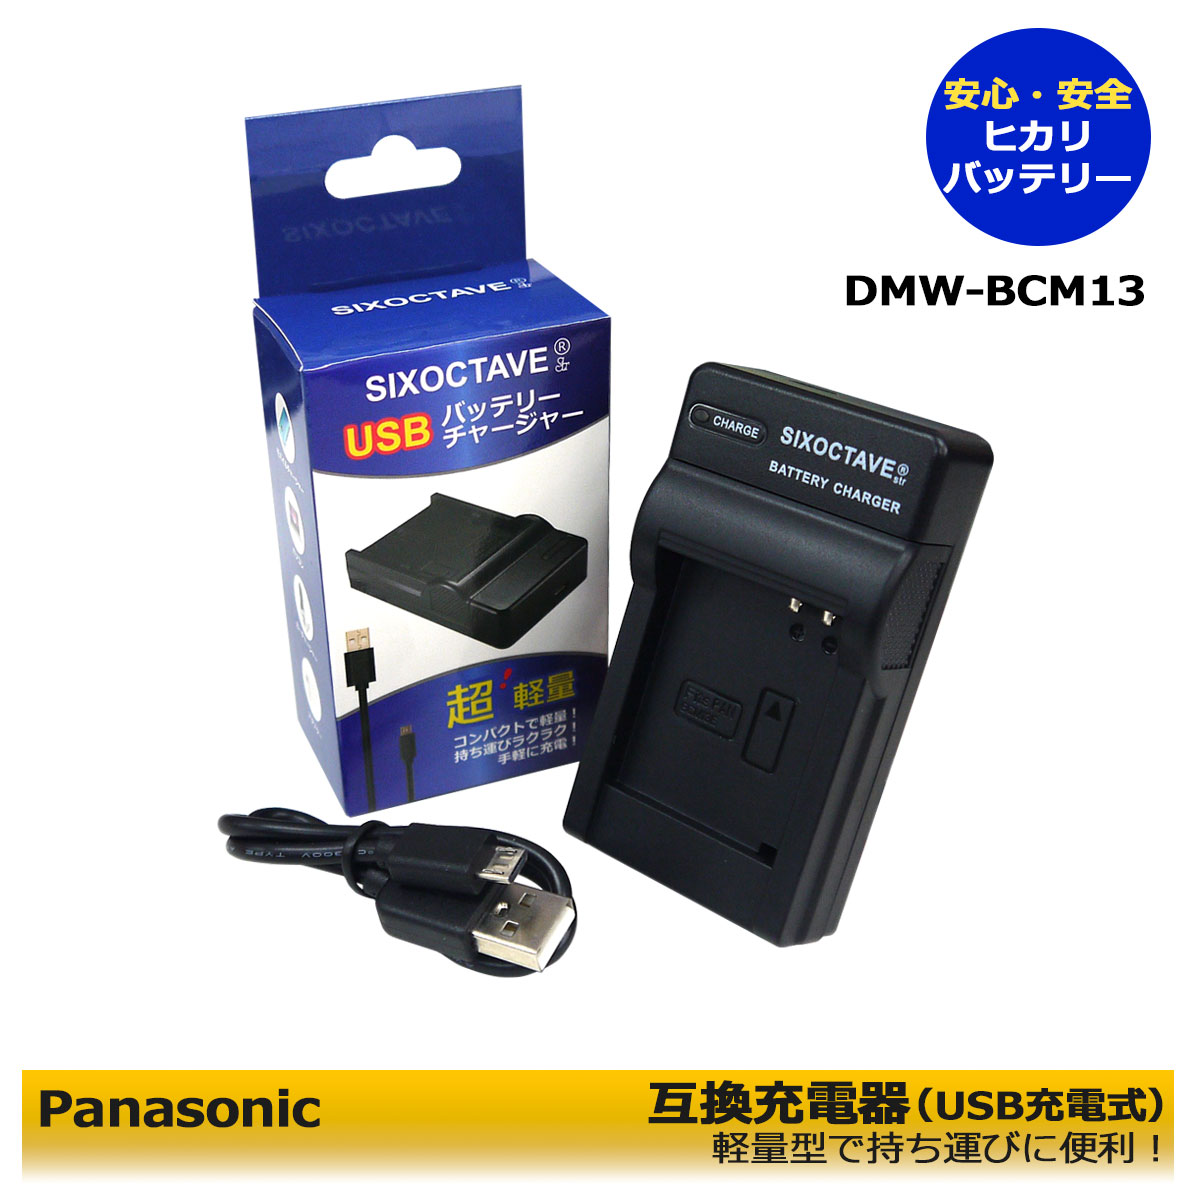 DMW-BTC11 DMW-BCM13 パナソニック 互換USBチャージャー デジタルカメラ用 DMC-LZ40 DMC-LZ40-K